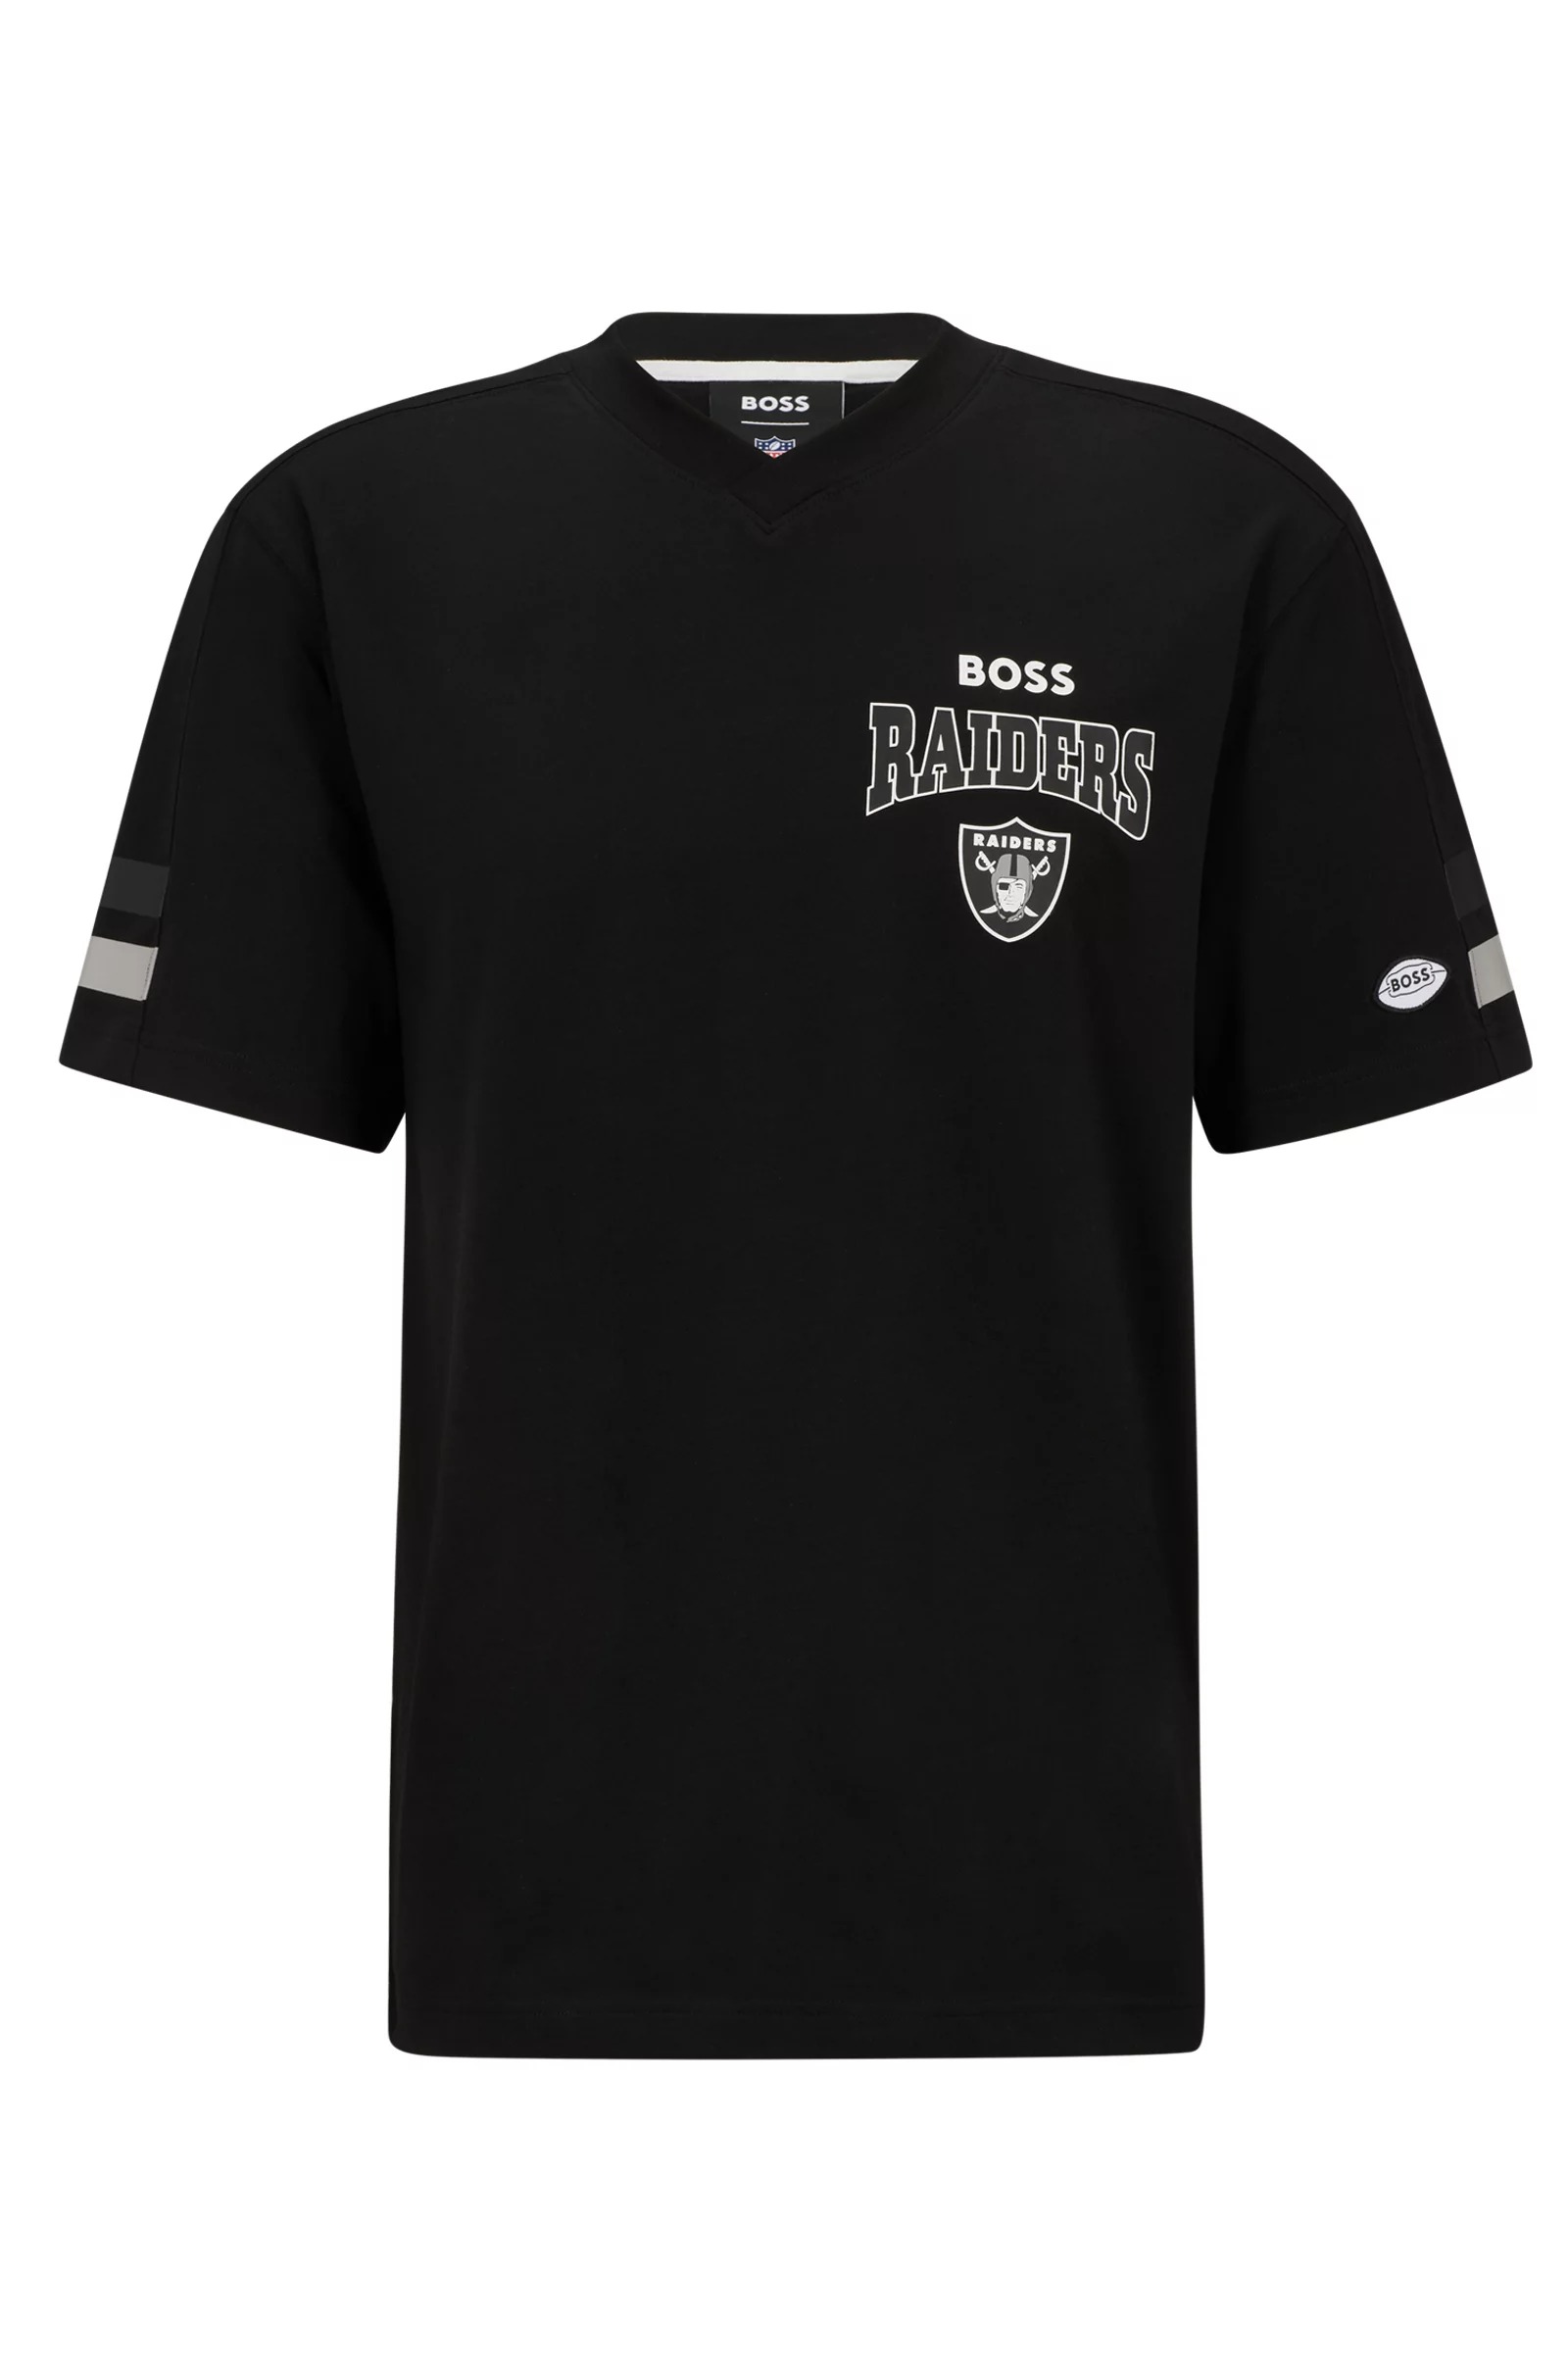 Футболка Boss X Nfl Cotton-blend With Collaborative Branding Raiders, черный розовая футболка свободного кроя с логотипом boss orange tchup